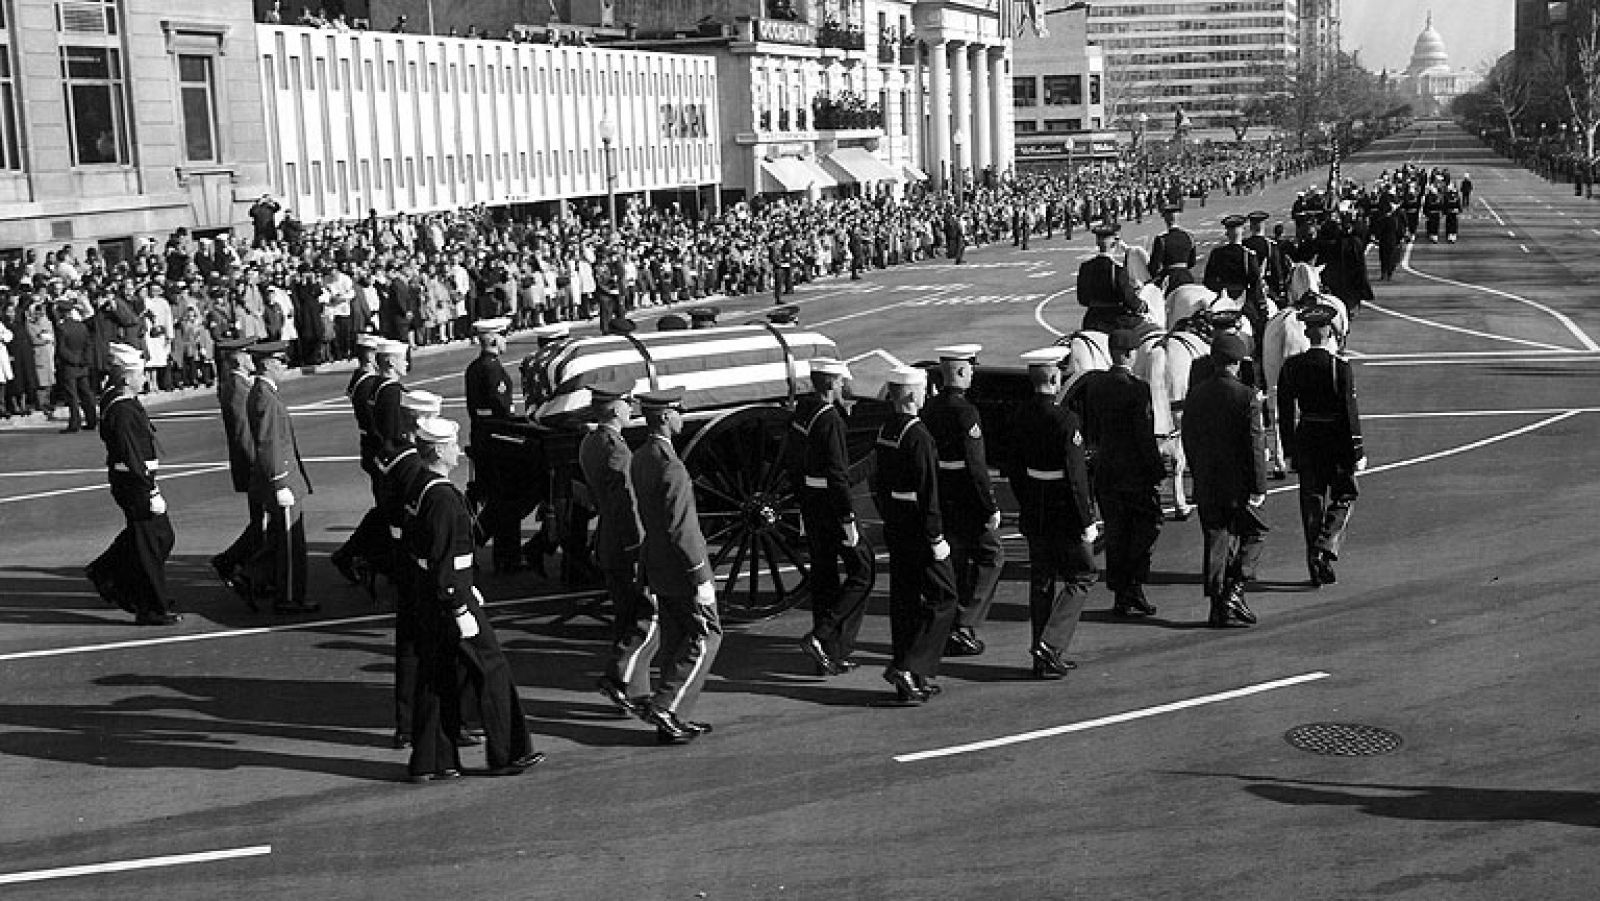 Telediario 1: El funeral de JFK, la gran cobertura mediática de la época | RTVE Play